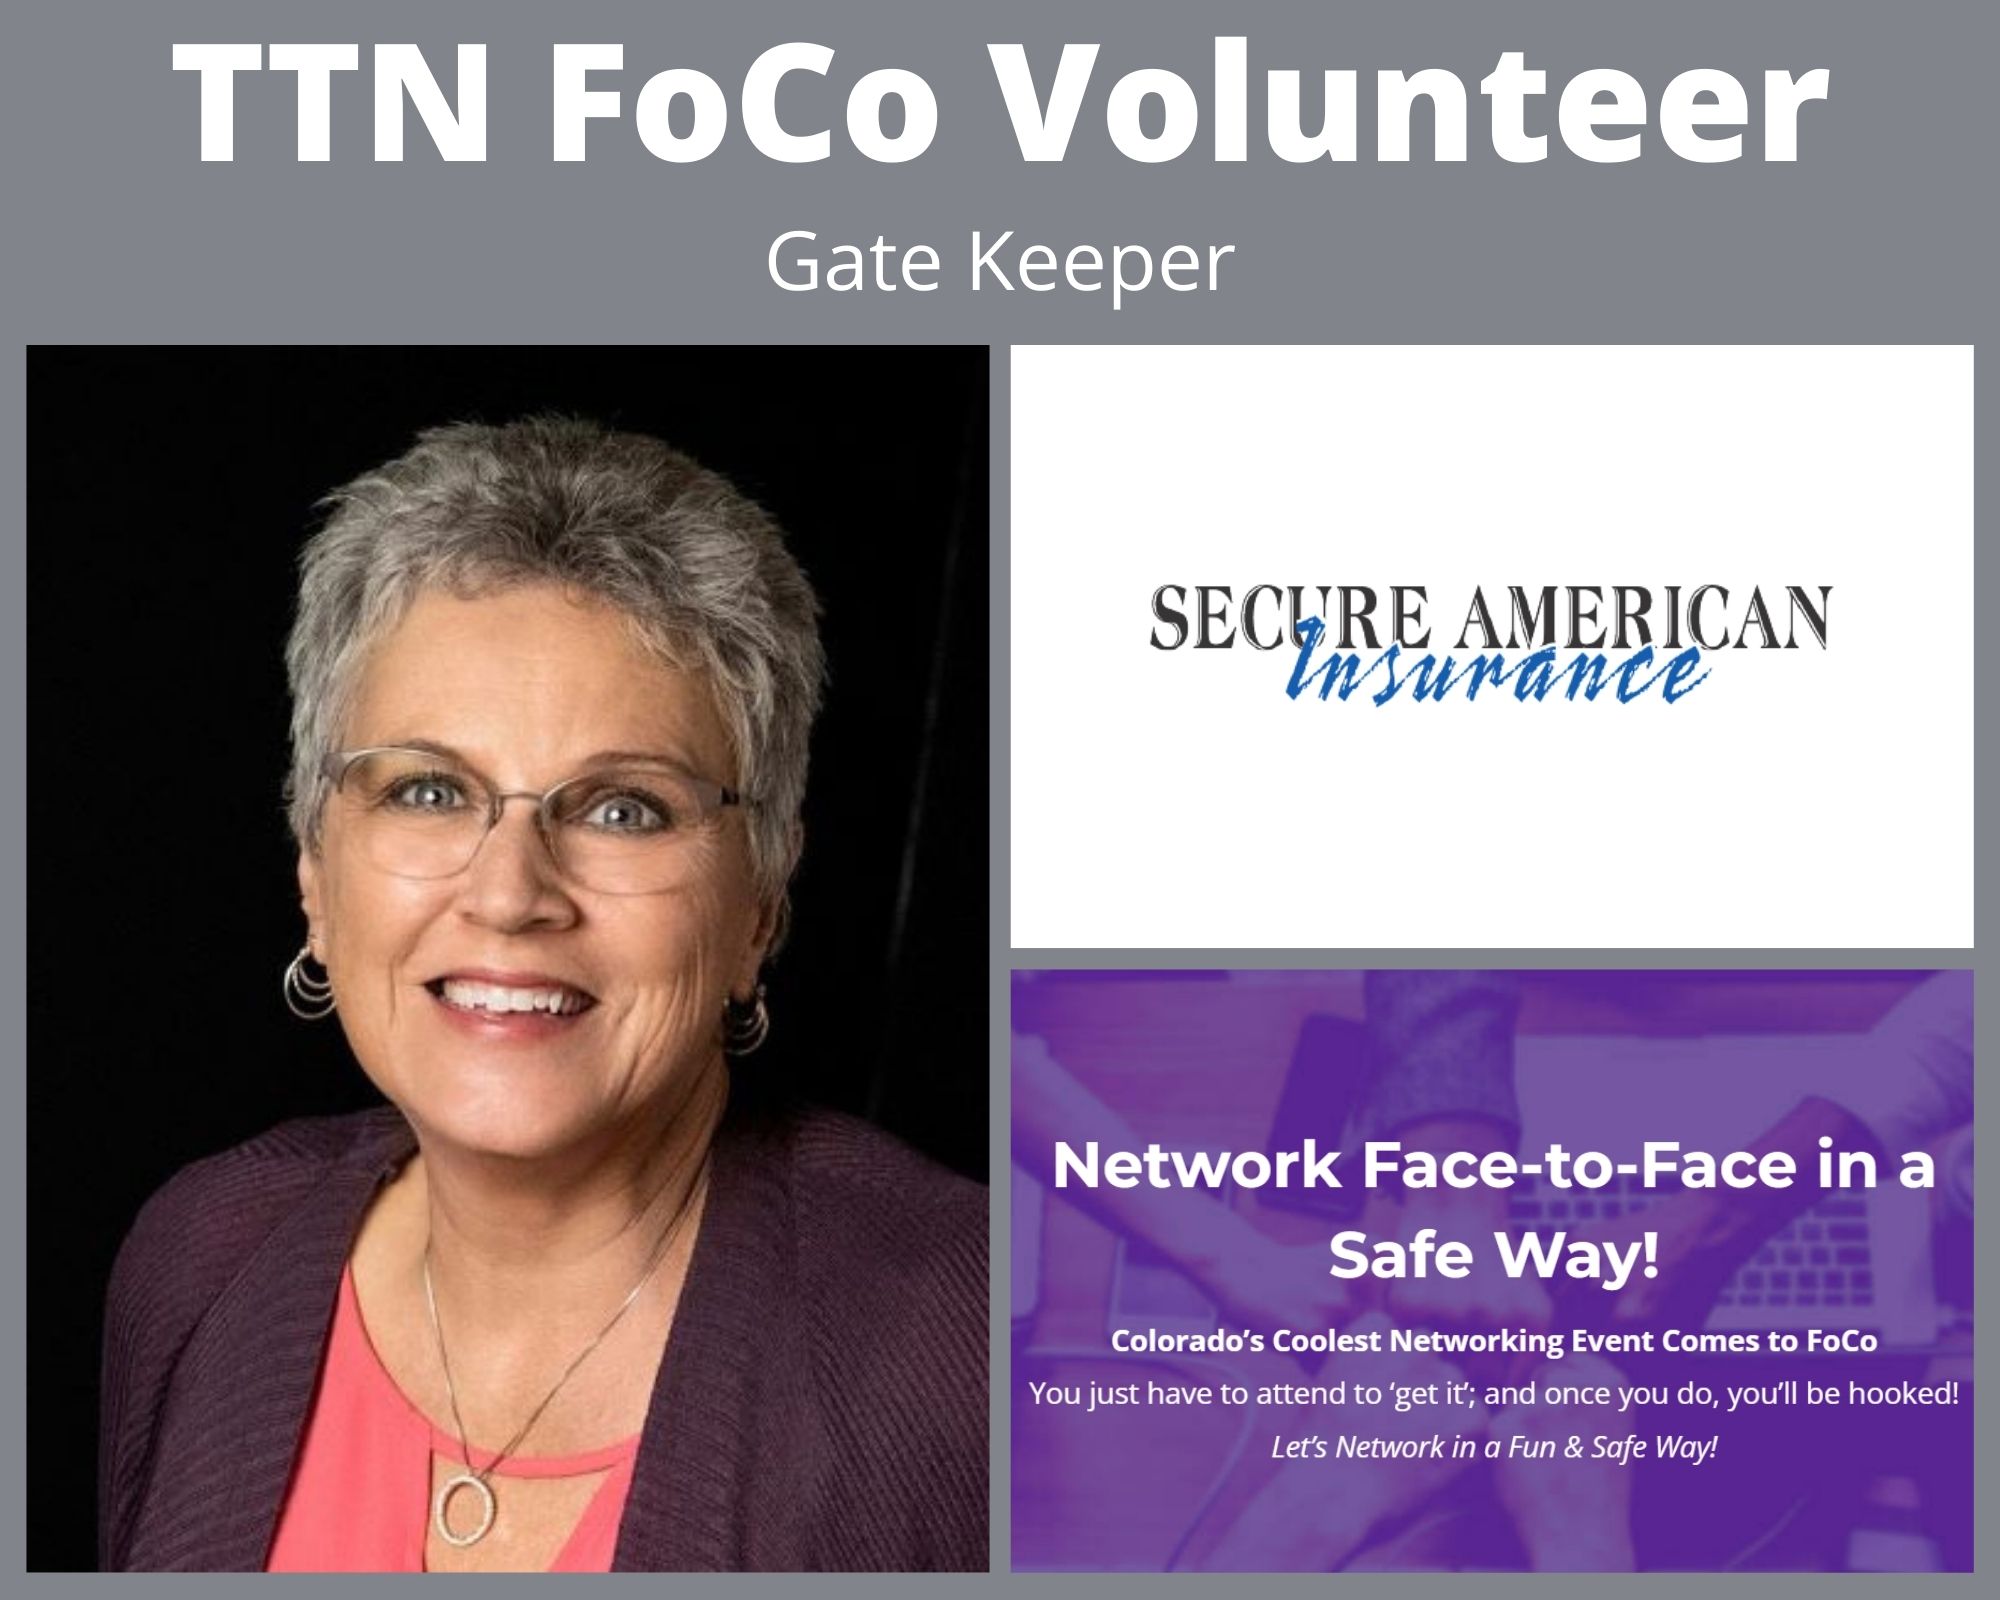 TTN FoCo Volunteer Oct22 - Gate Keeper - Barb Hanfland